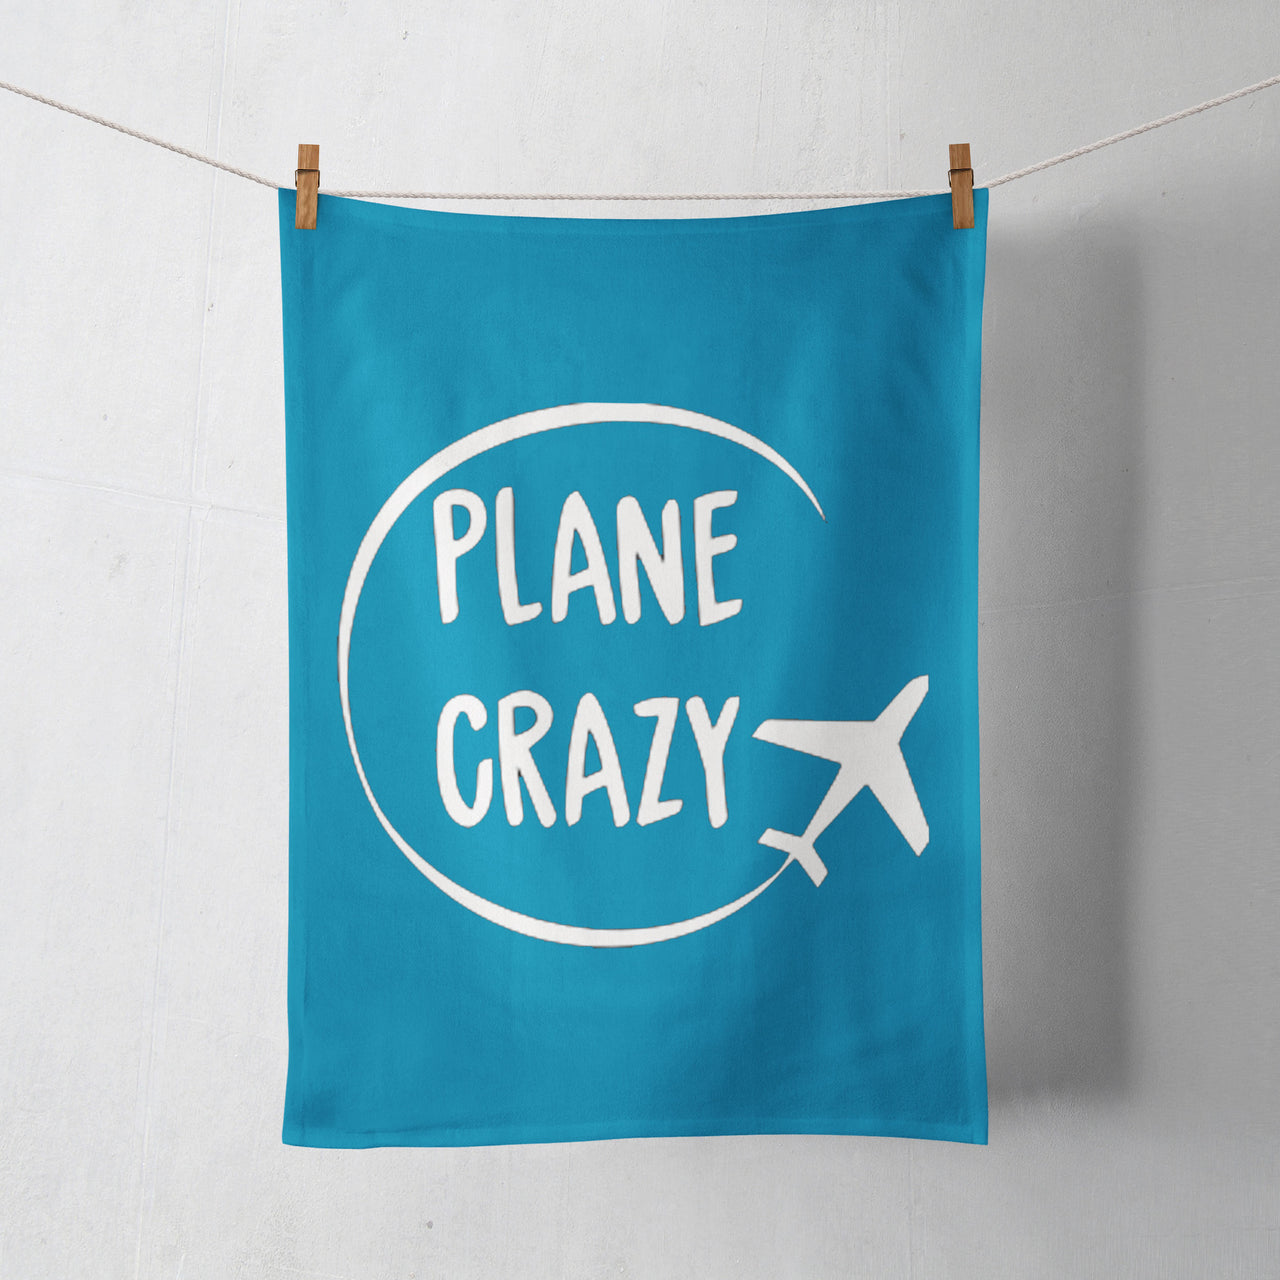 Plane Crazy Designed Towels